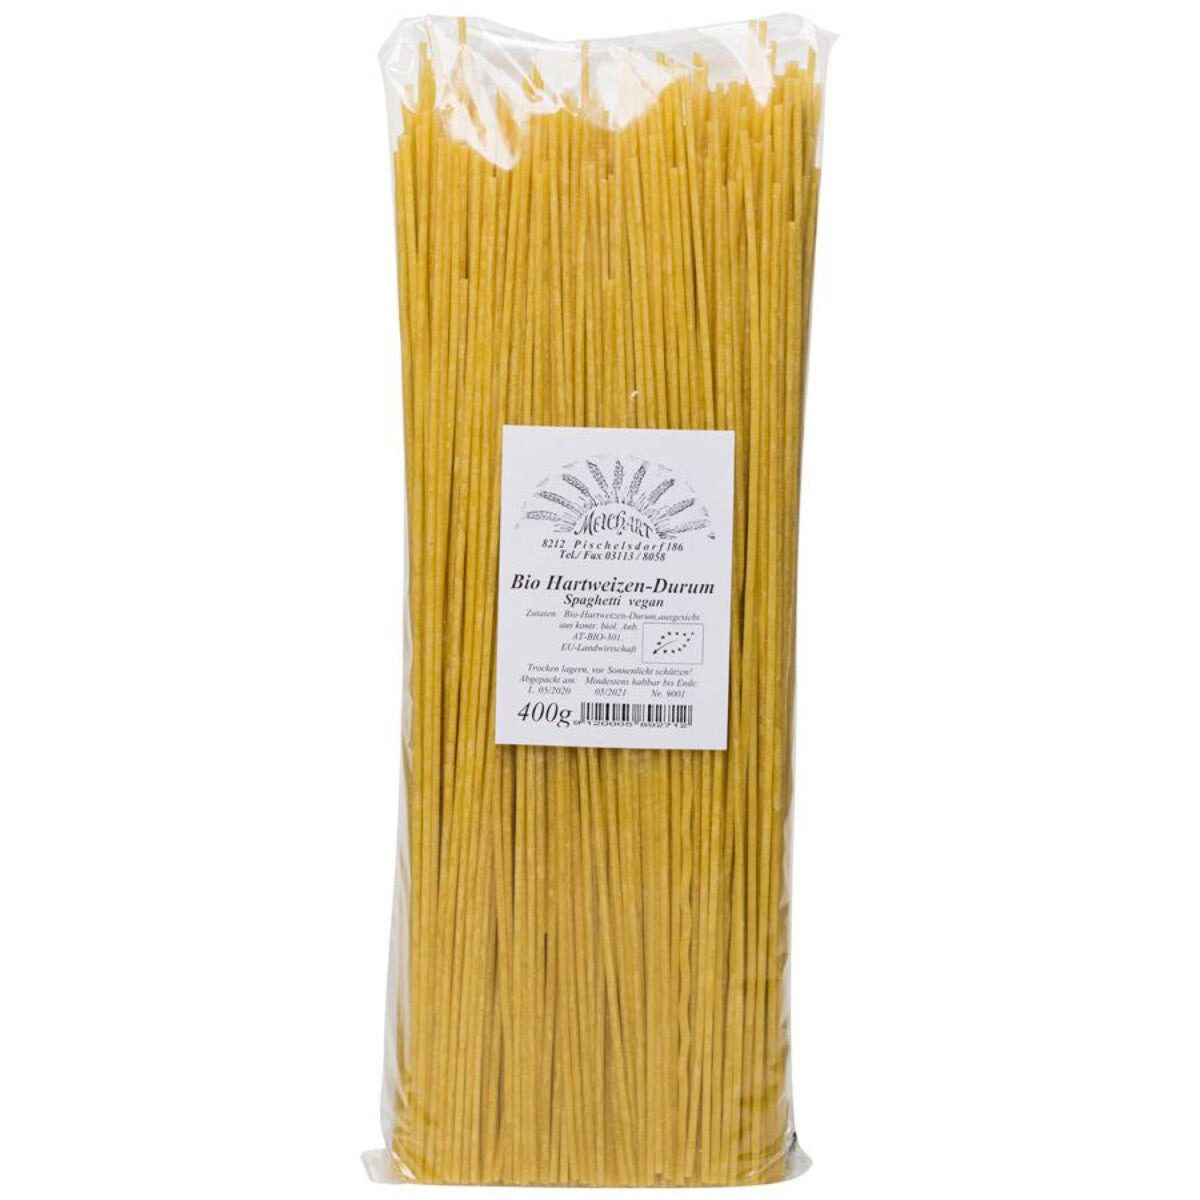 MELCHART Durum Spaghetti - 400 g